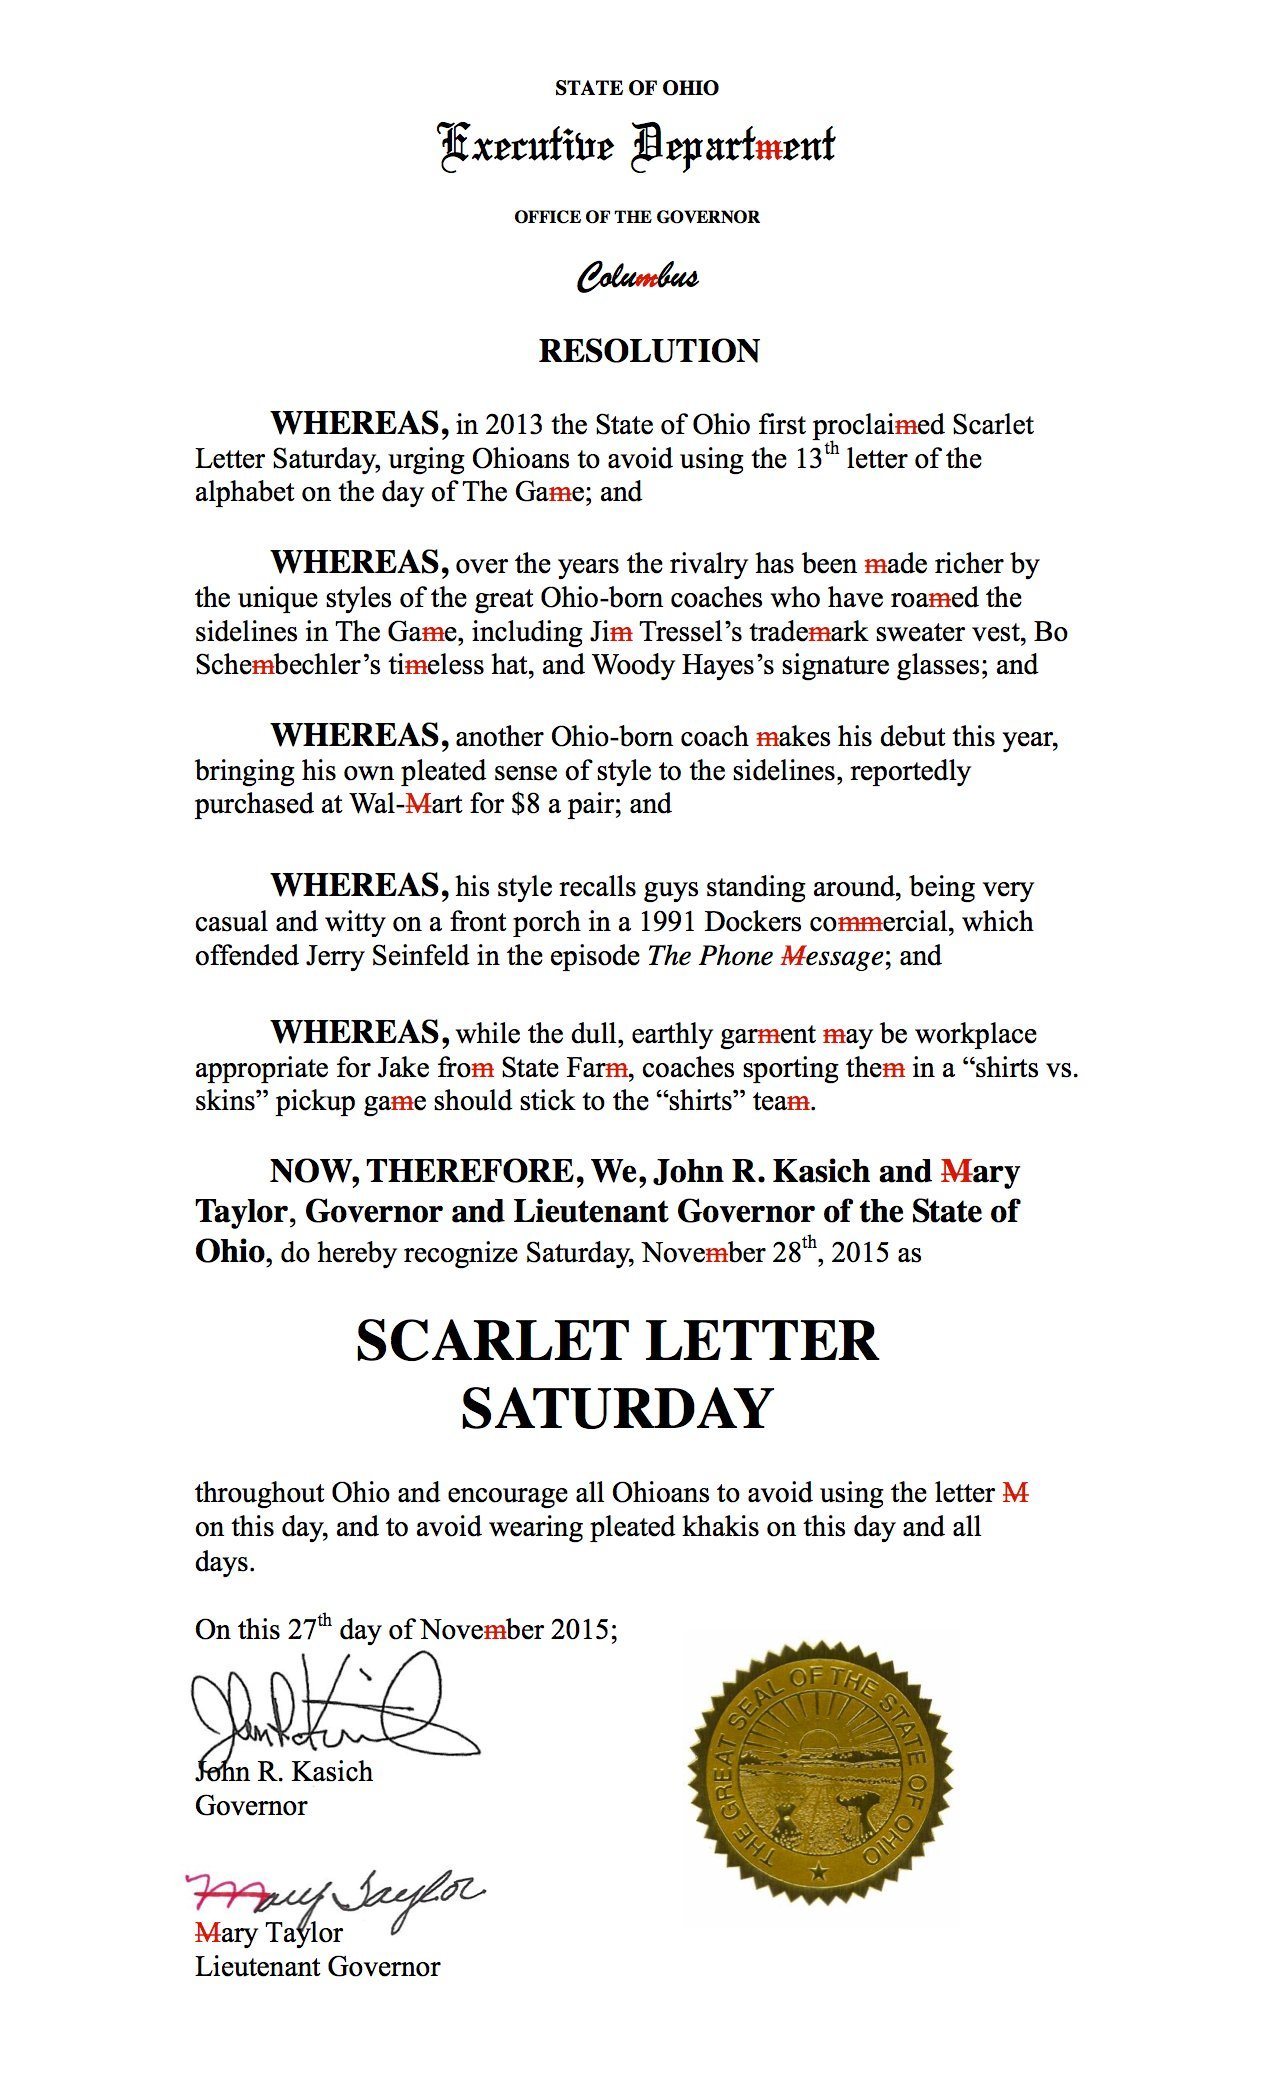 Scarlet_Letter_Saturday_2015_resolution.jpg